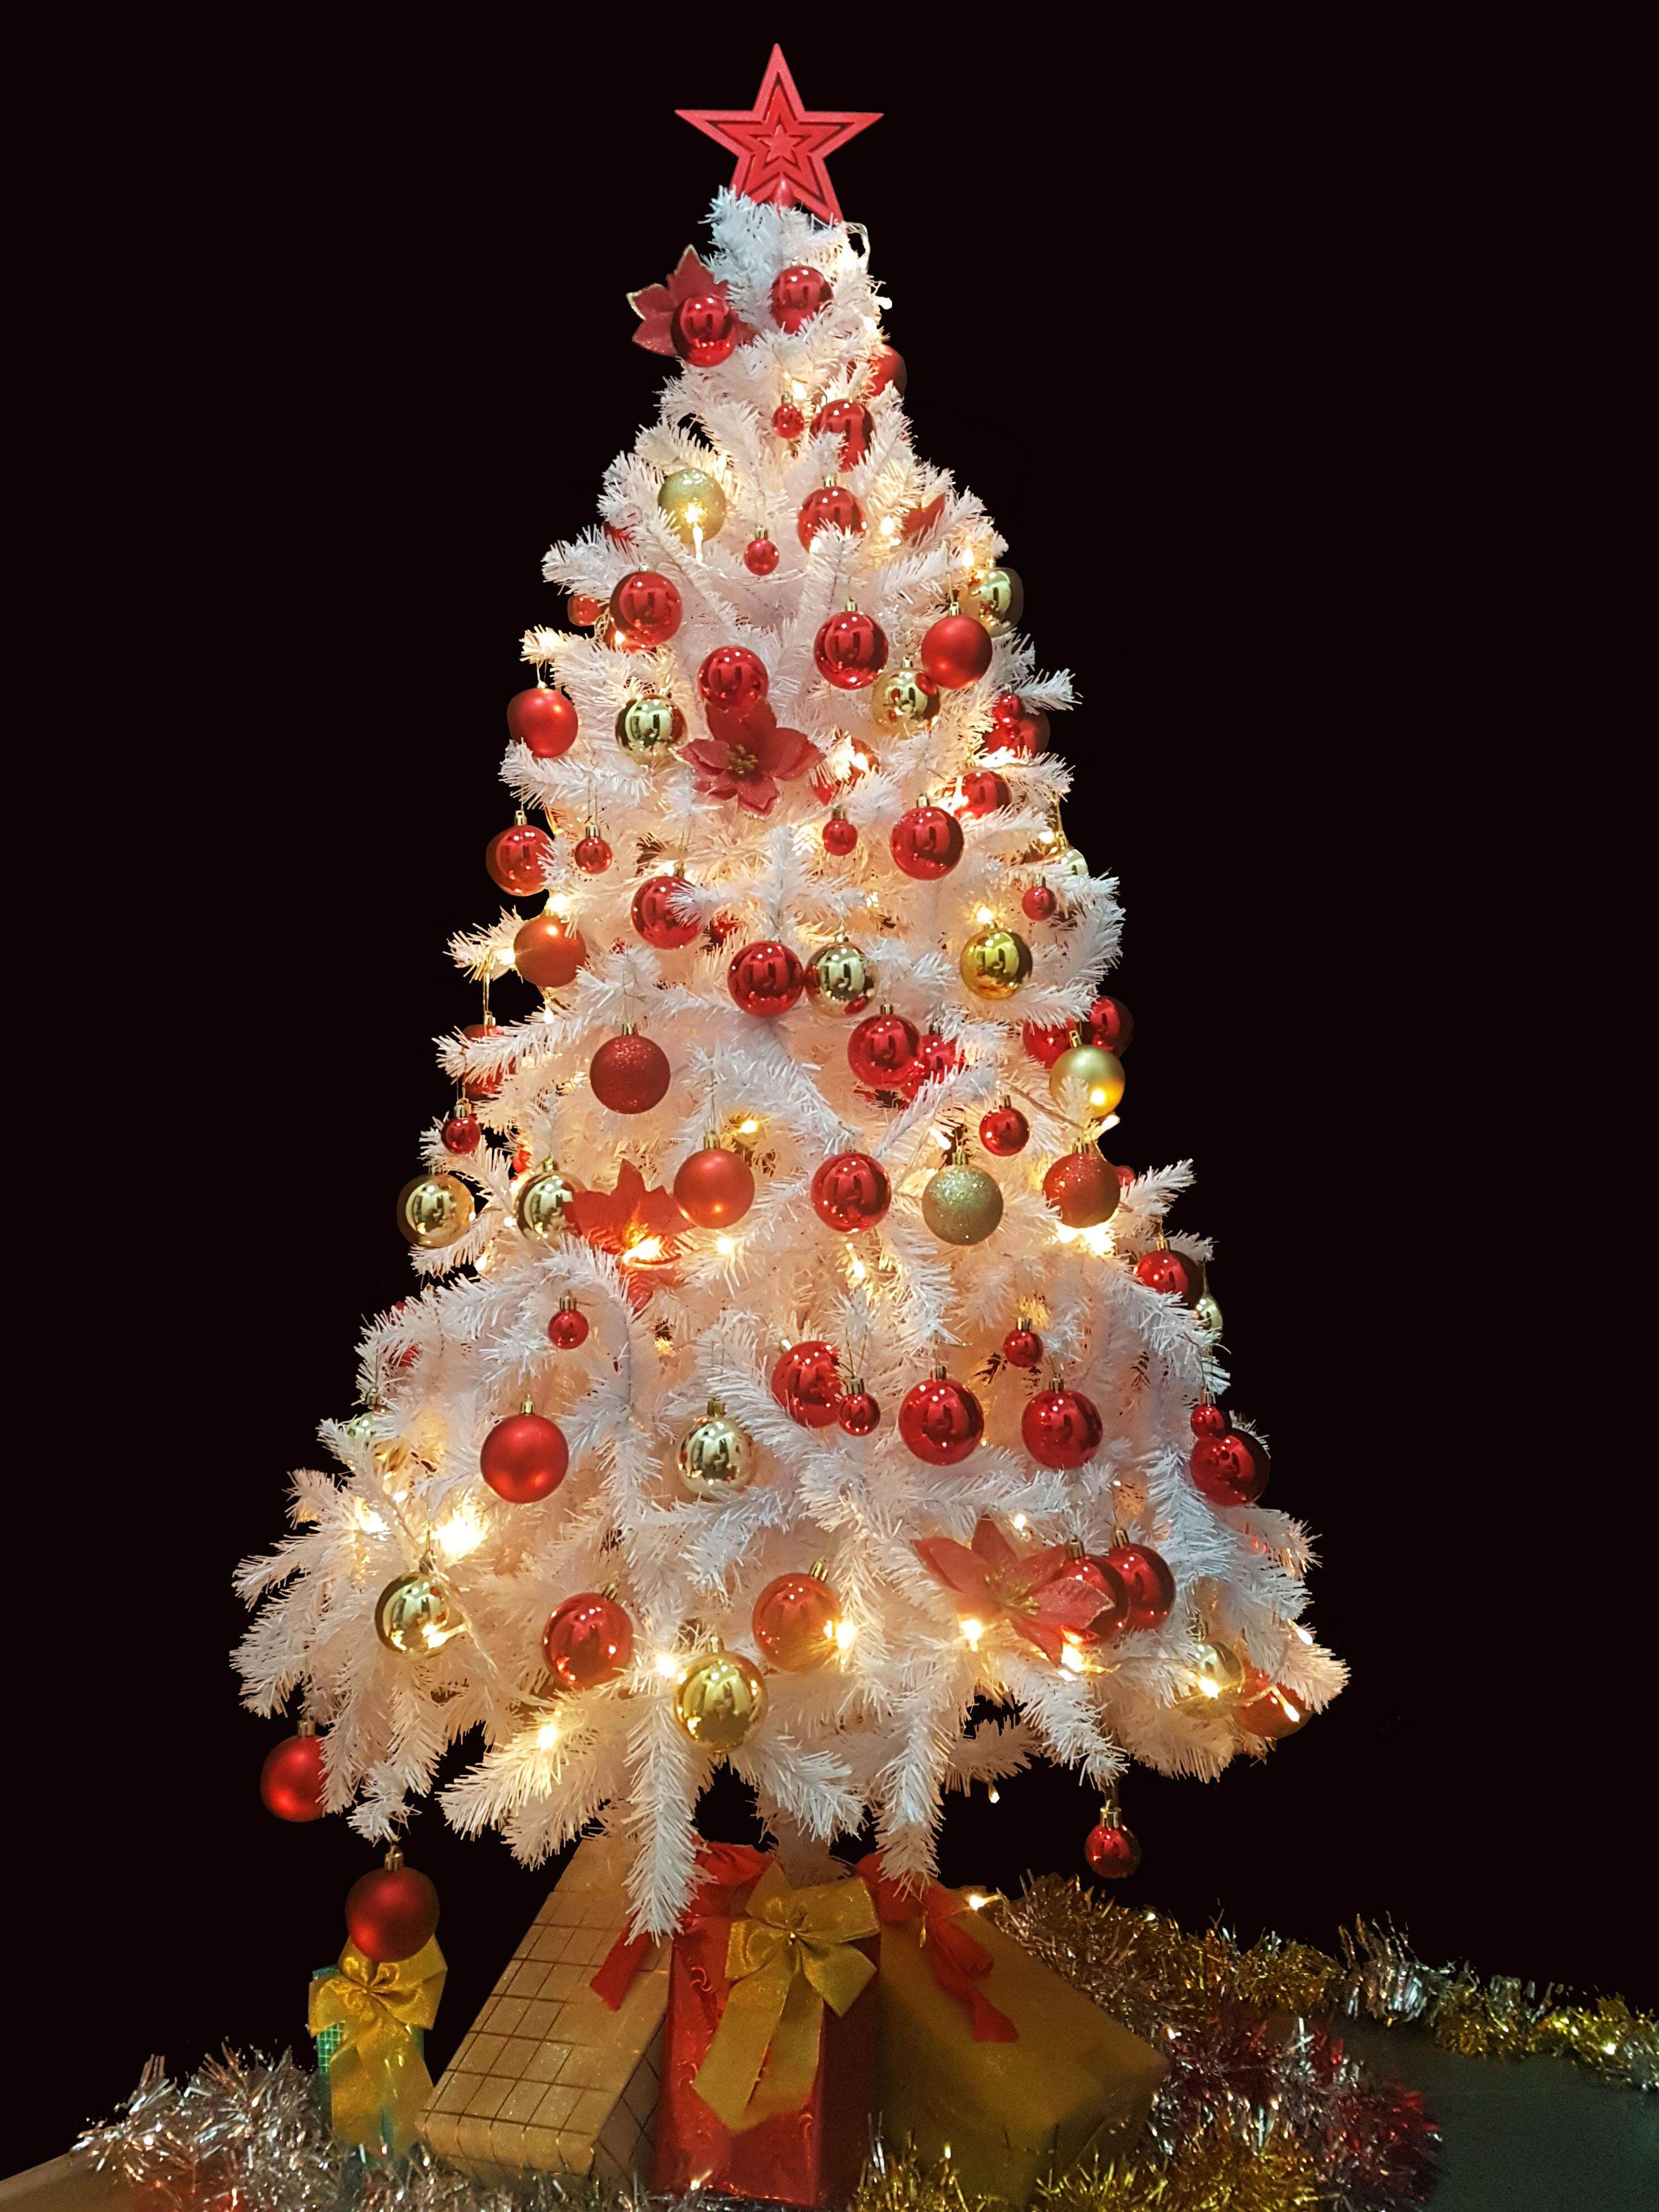 X-Mas ต้นคริสมาสต์ปลอมสีขาวฐานเหล็ก ต้นคริสต์มาสขนาดเล็ก พร้อมของตกแต่งธีมลูกบอล ต้นคริสมาสปลอมชนิดพุ่มหนา ขนาด1.8เมตร/6ฟุต   6'/ 1.8M Medium-sized WHITE Christmas Tree